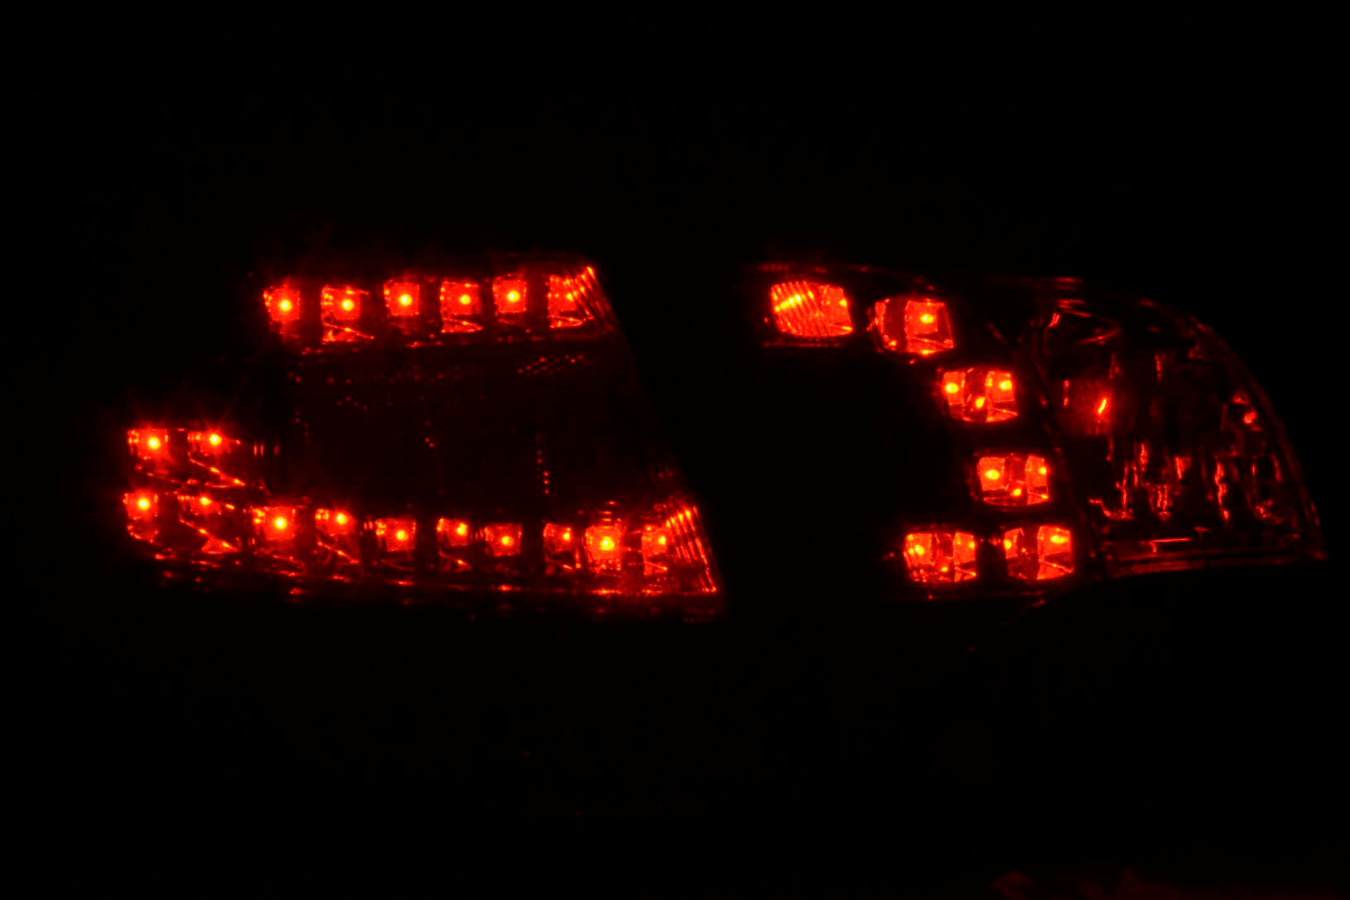 Audi A4 (B7/8E) Avant Chrome Smoke LED Taillights Set (2004-2008) - K2 Industries